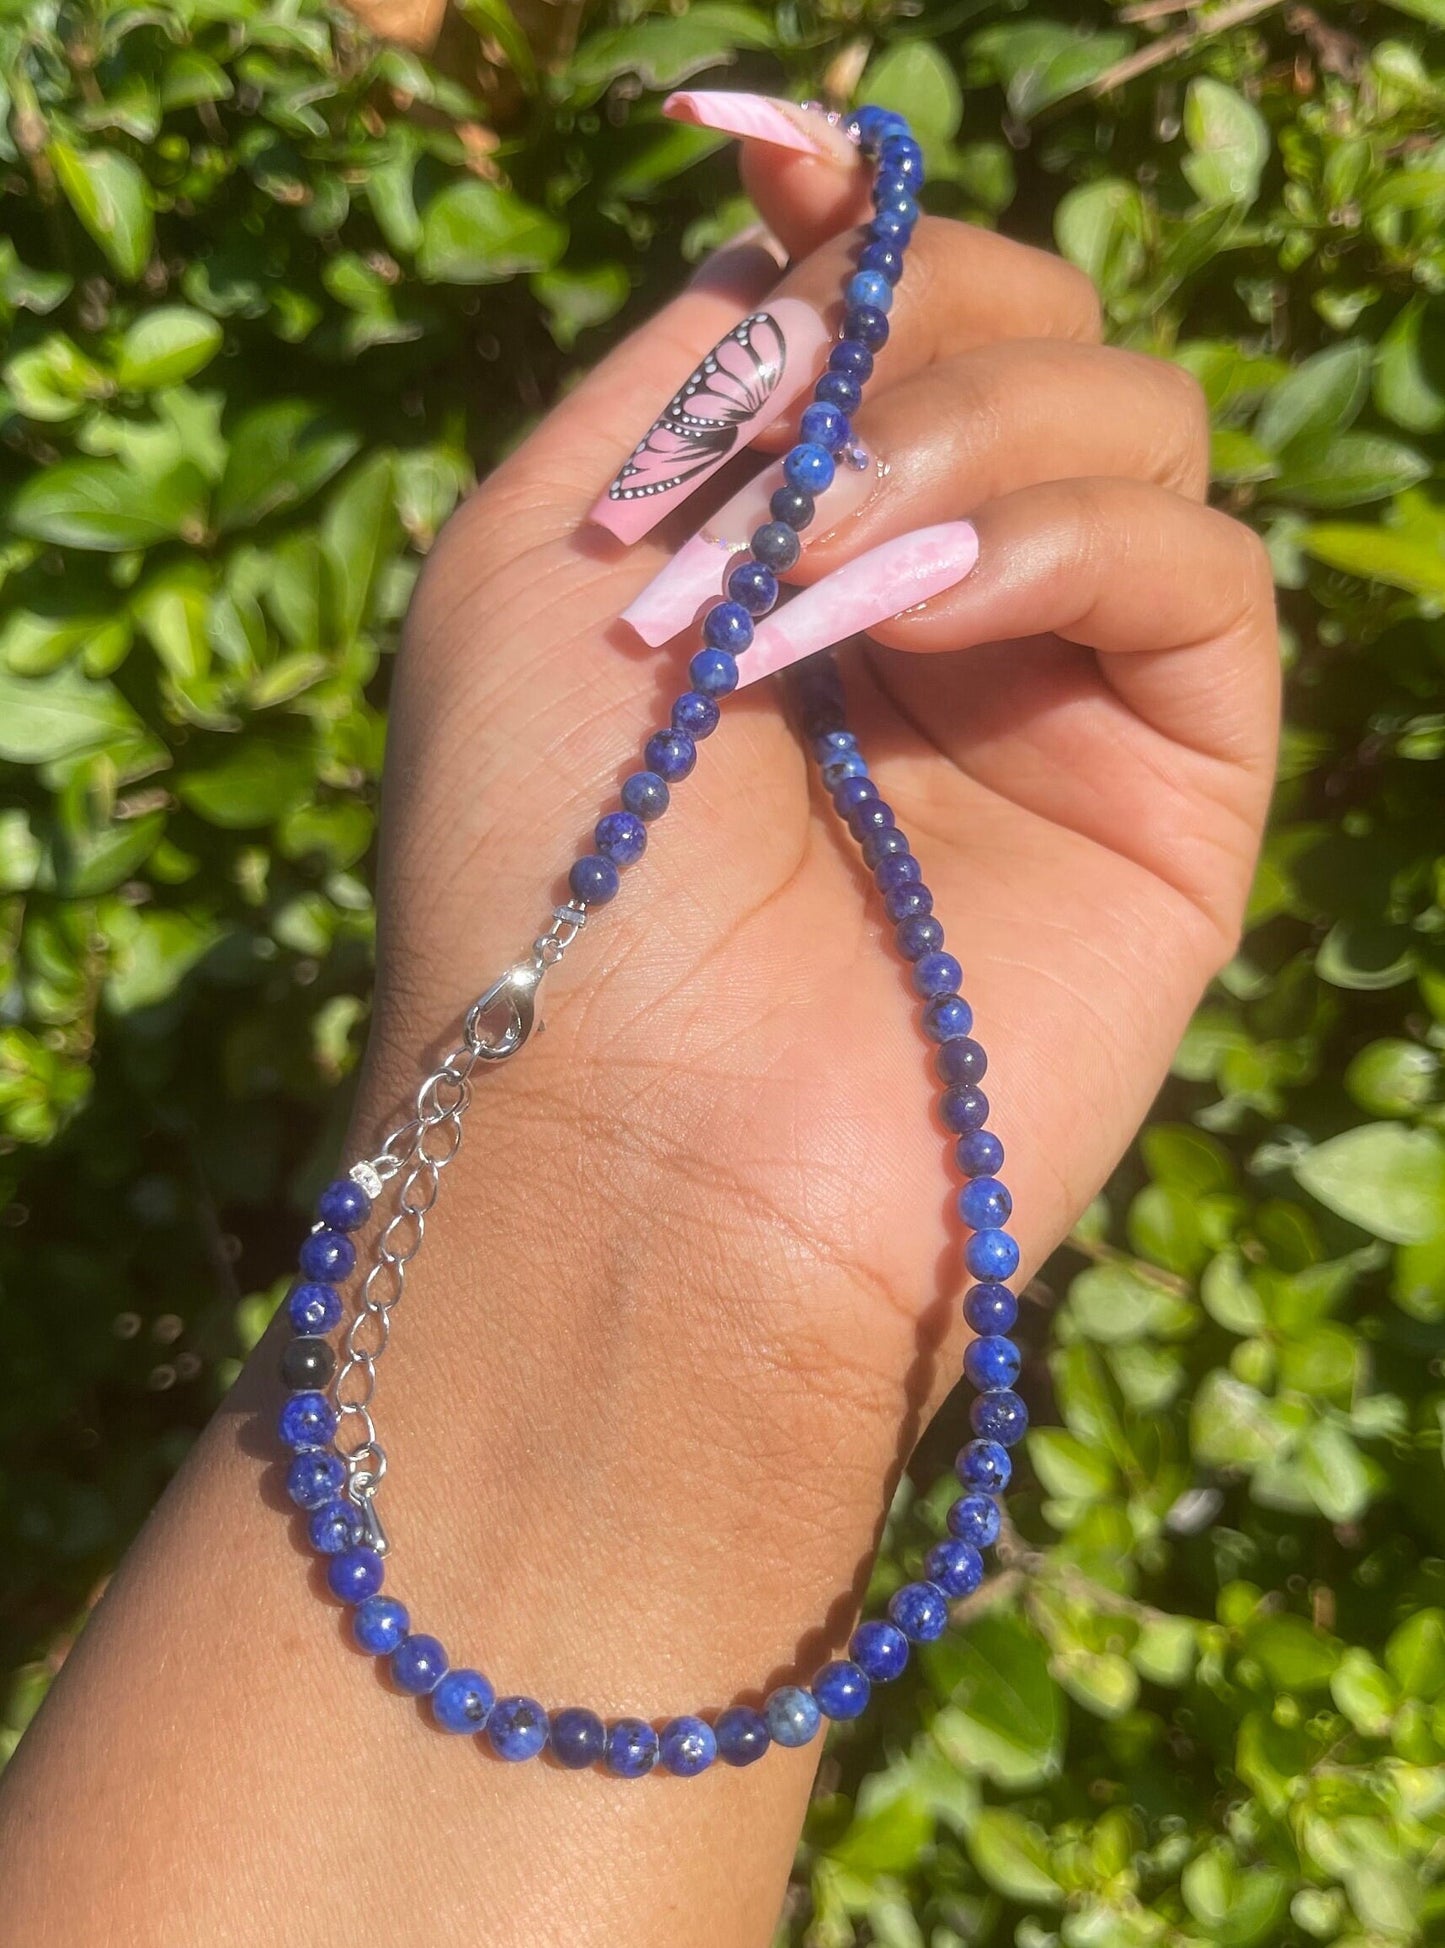 Lapis Lazuli Necklace, Beads Jewelry, Handmade Crystal Healing Energy, Blue Beaded Choker, Boho Jewelry, Gift for Her, Natural Chakra Stones